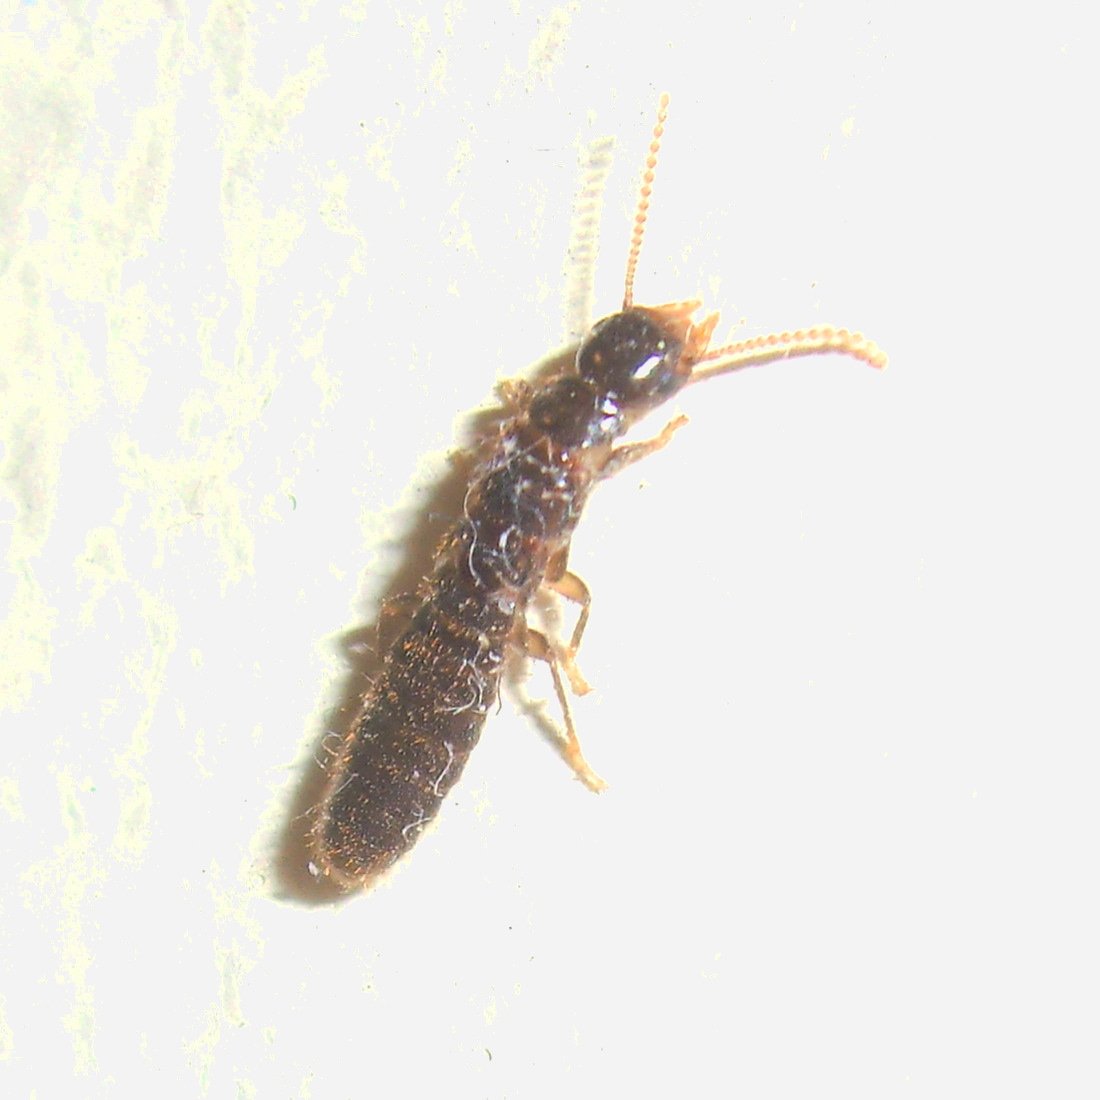 Termite nymph?